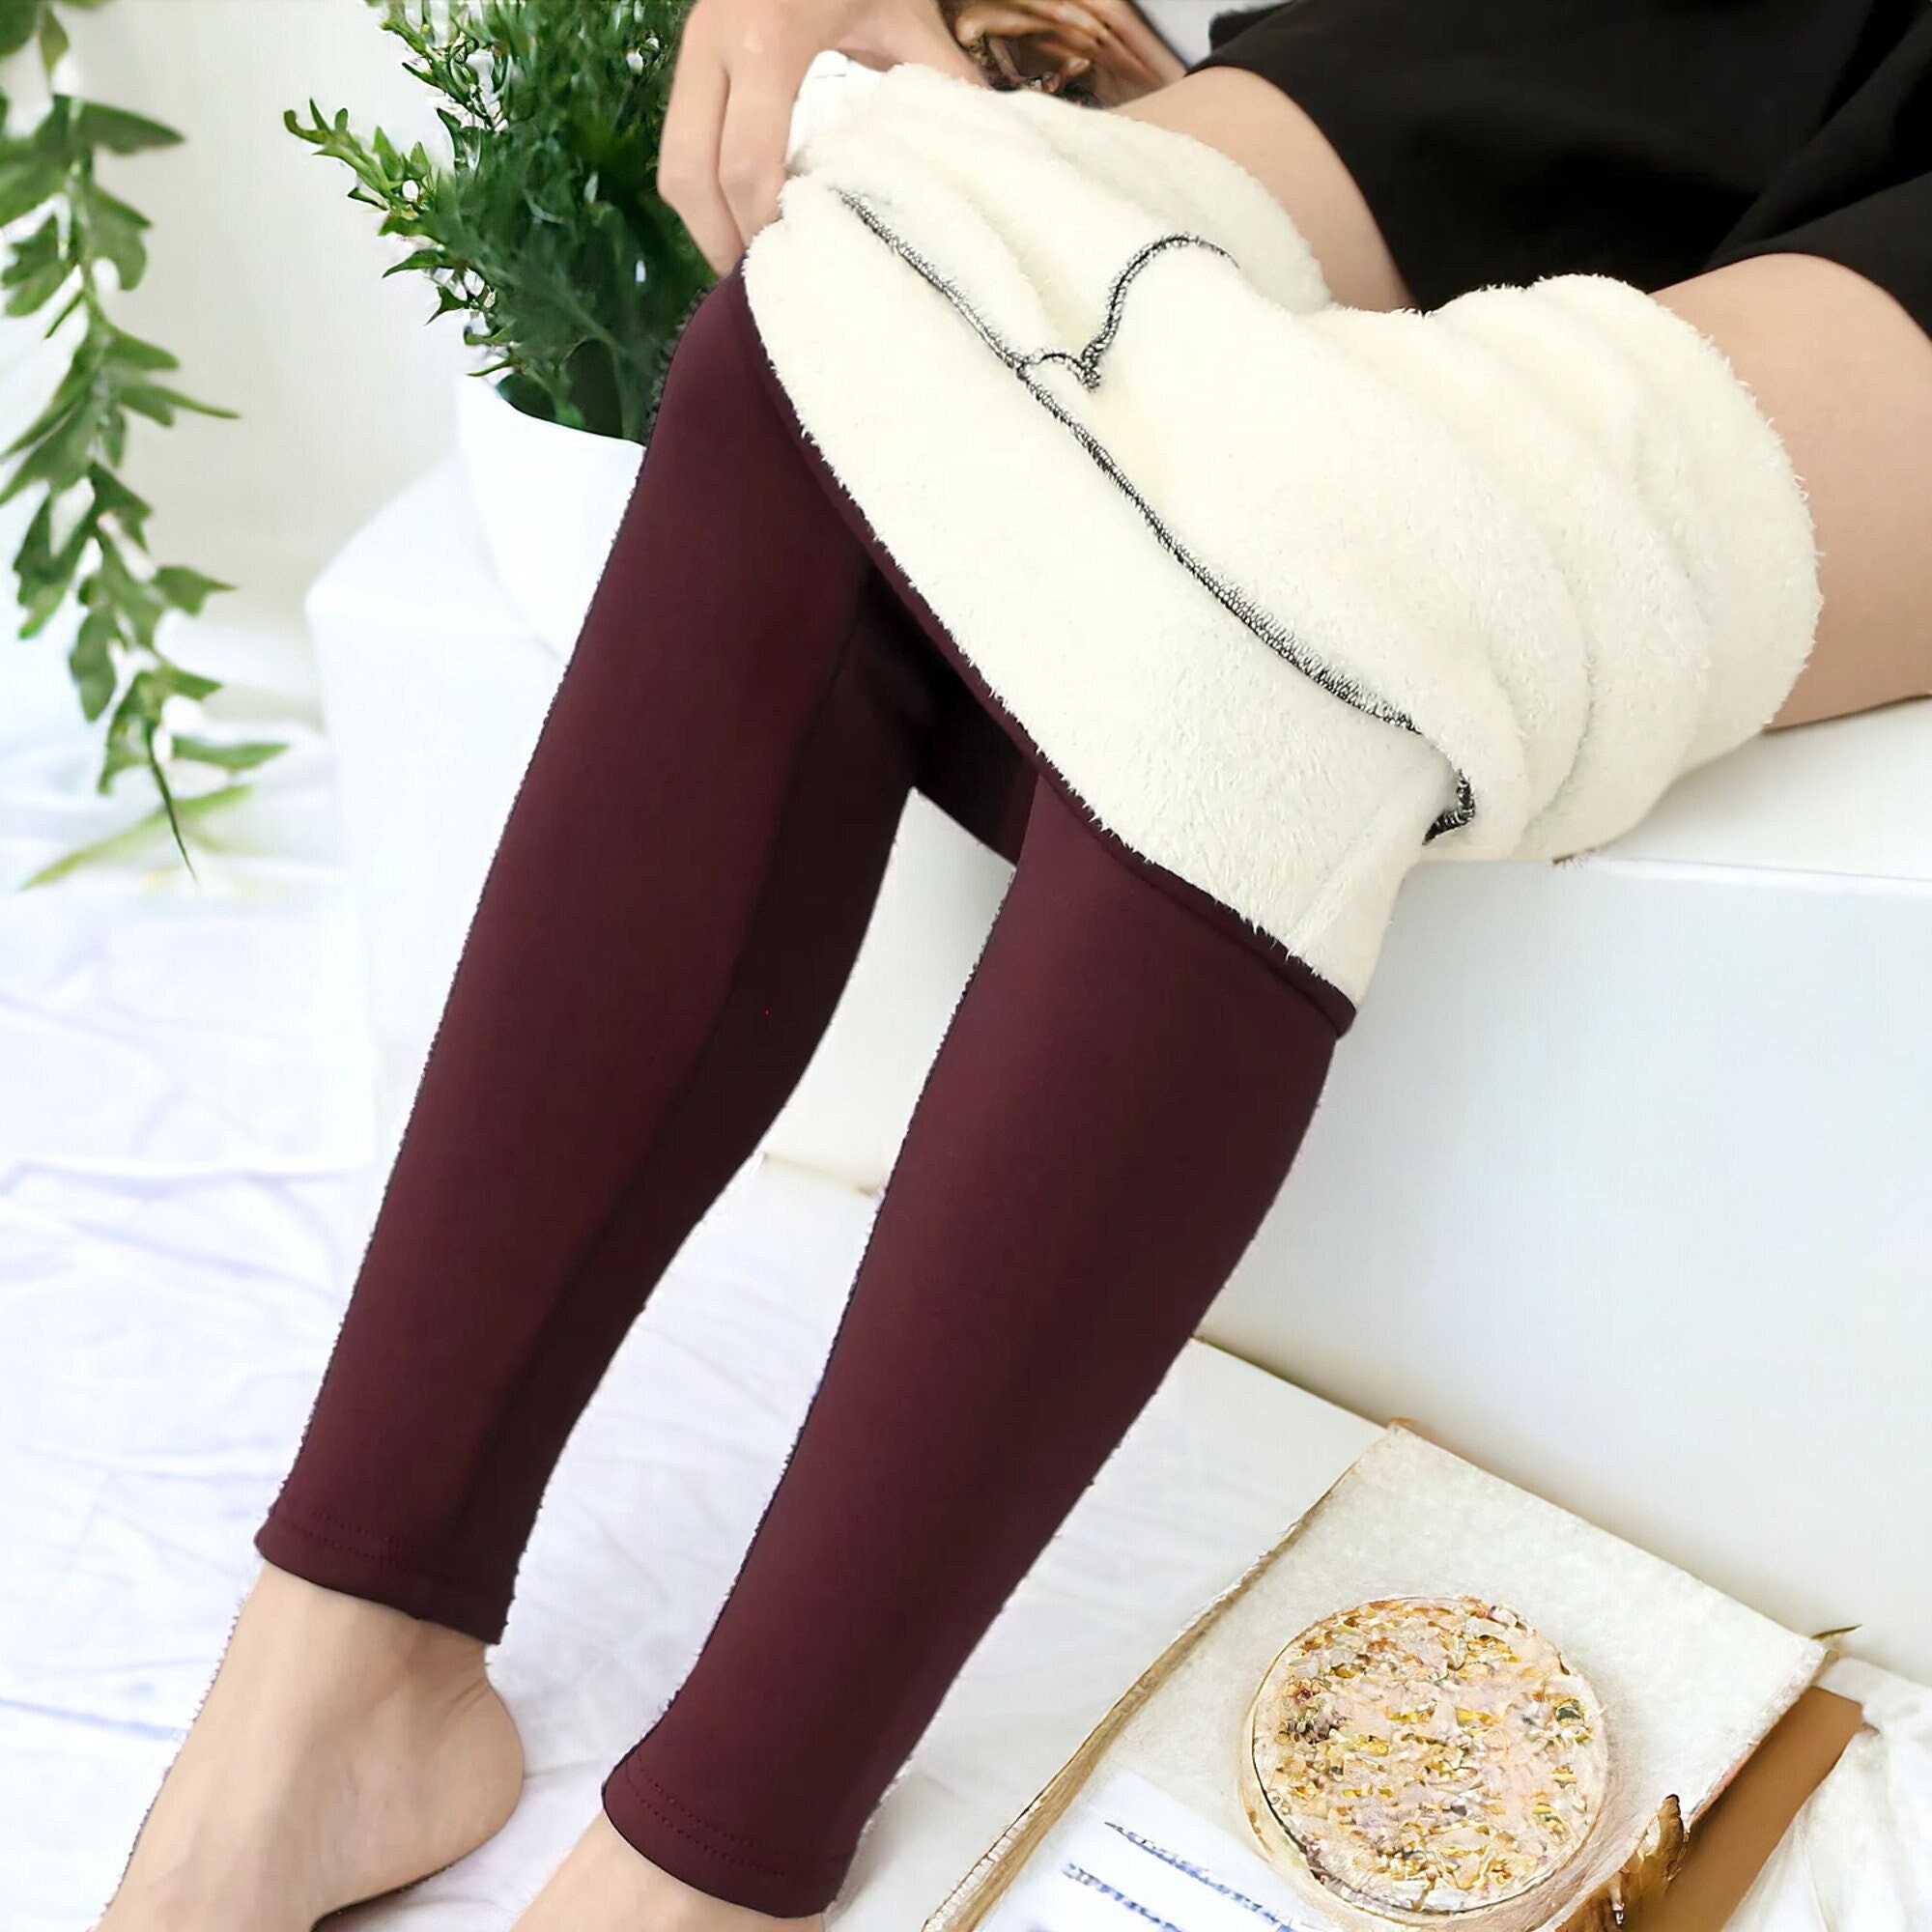 Buy Fleece Lined Leggings Plus Size Online In India -  India